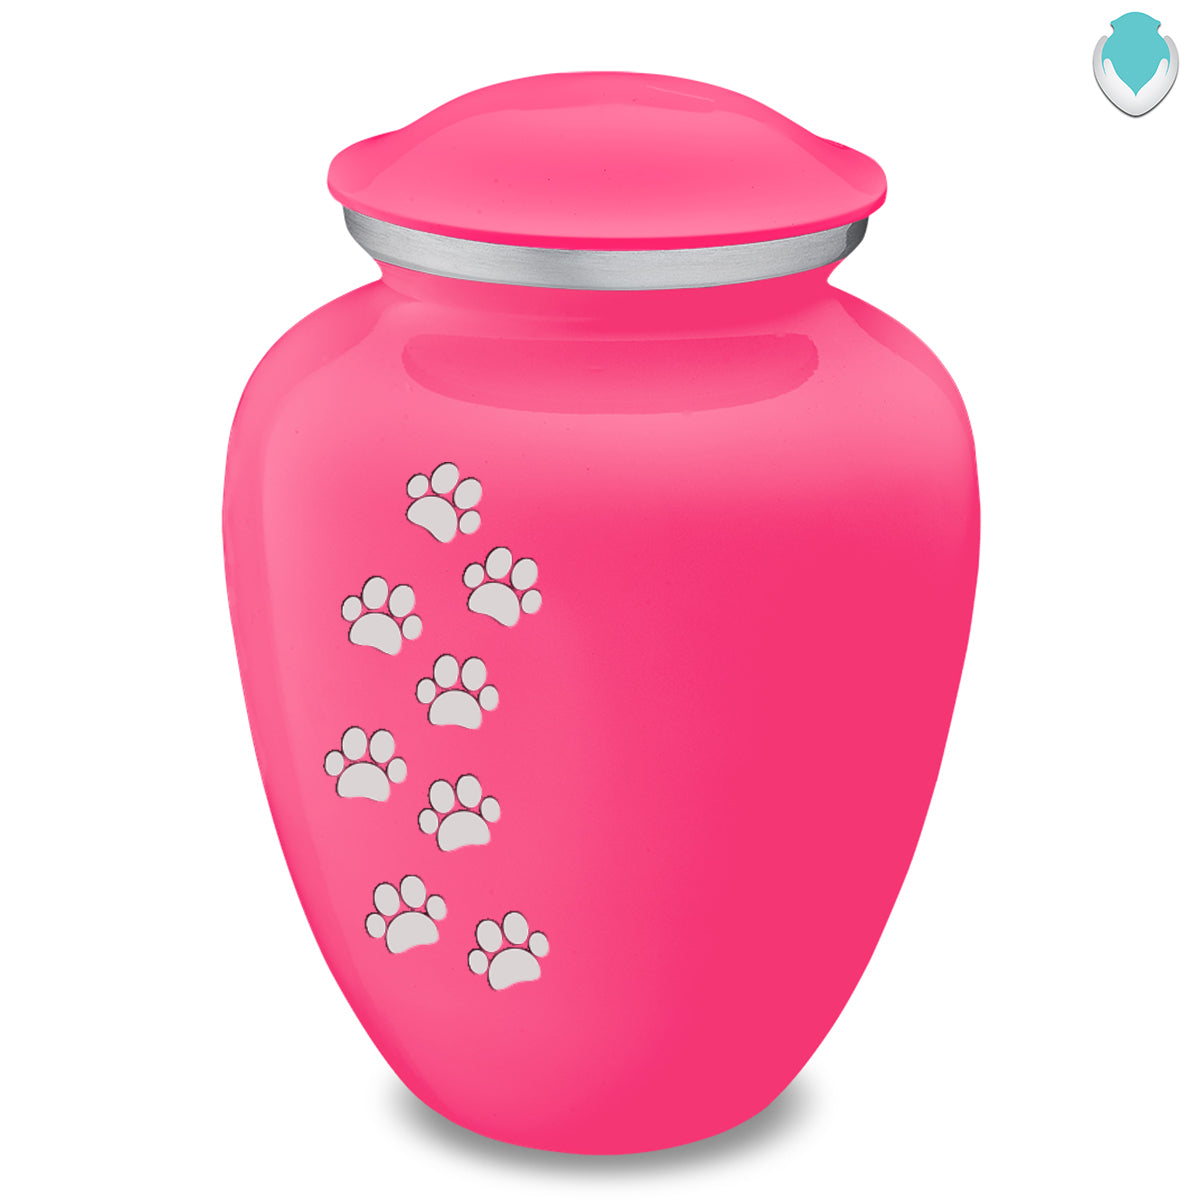 Large Embrace Bright Pink Walking Paws Pet Cremation Urn